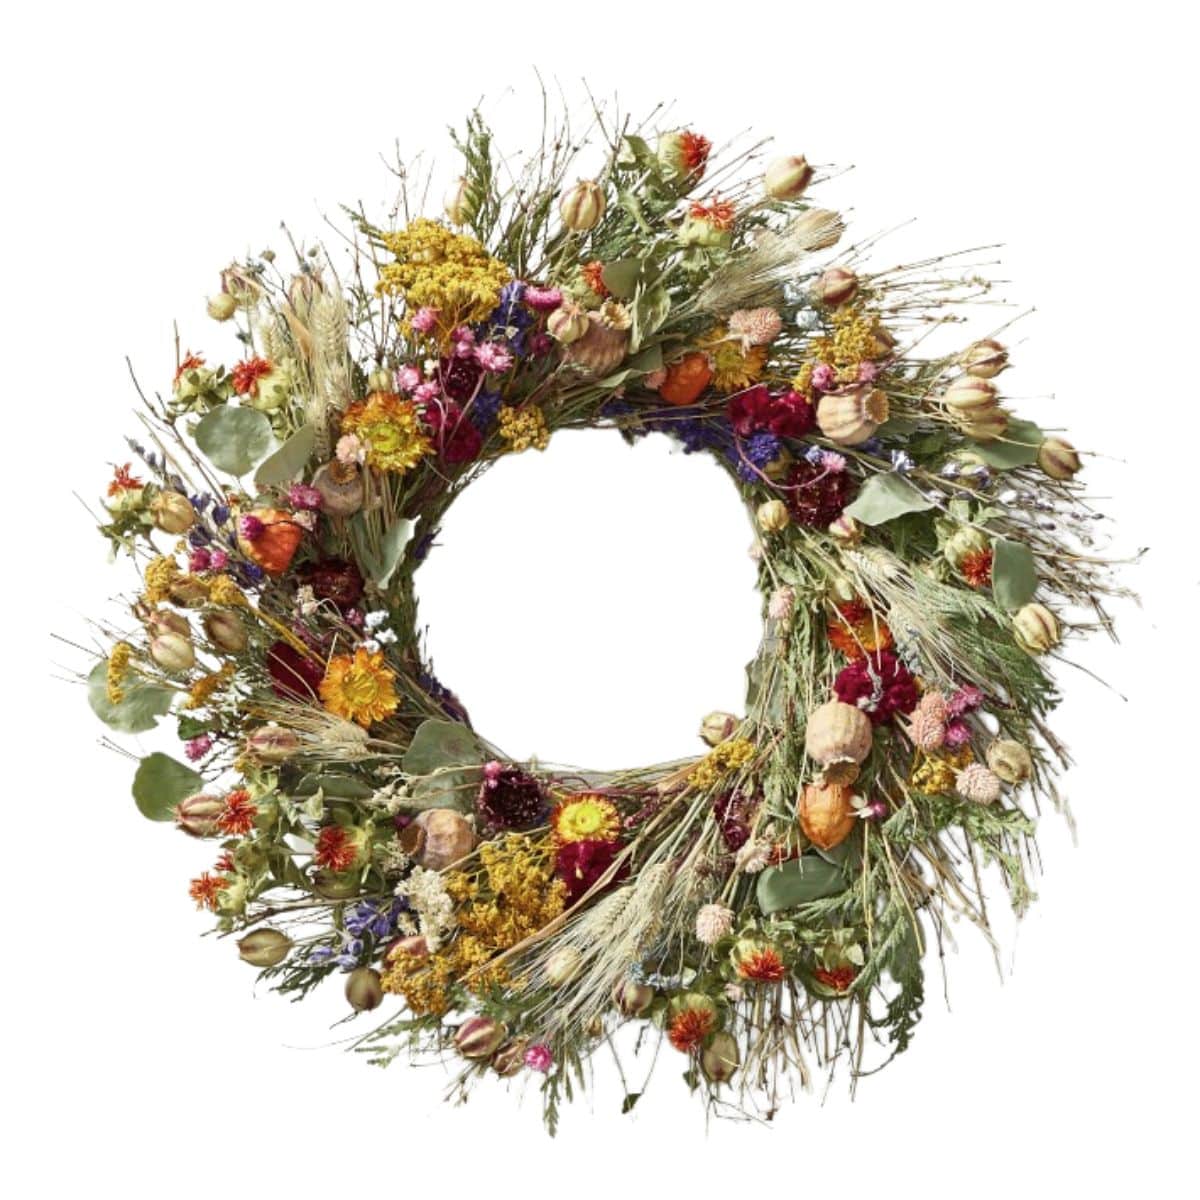 wreath made of lavender, poppy pods, celosia, yarrow, larkspur, wheat, nigella, eucalyptus from williams sonoma.